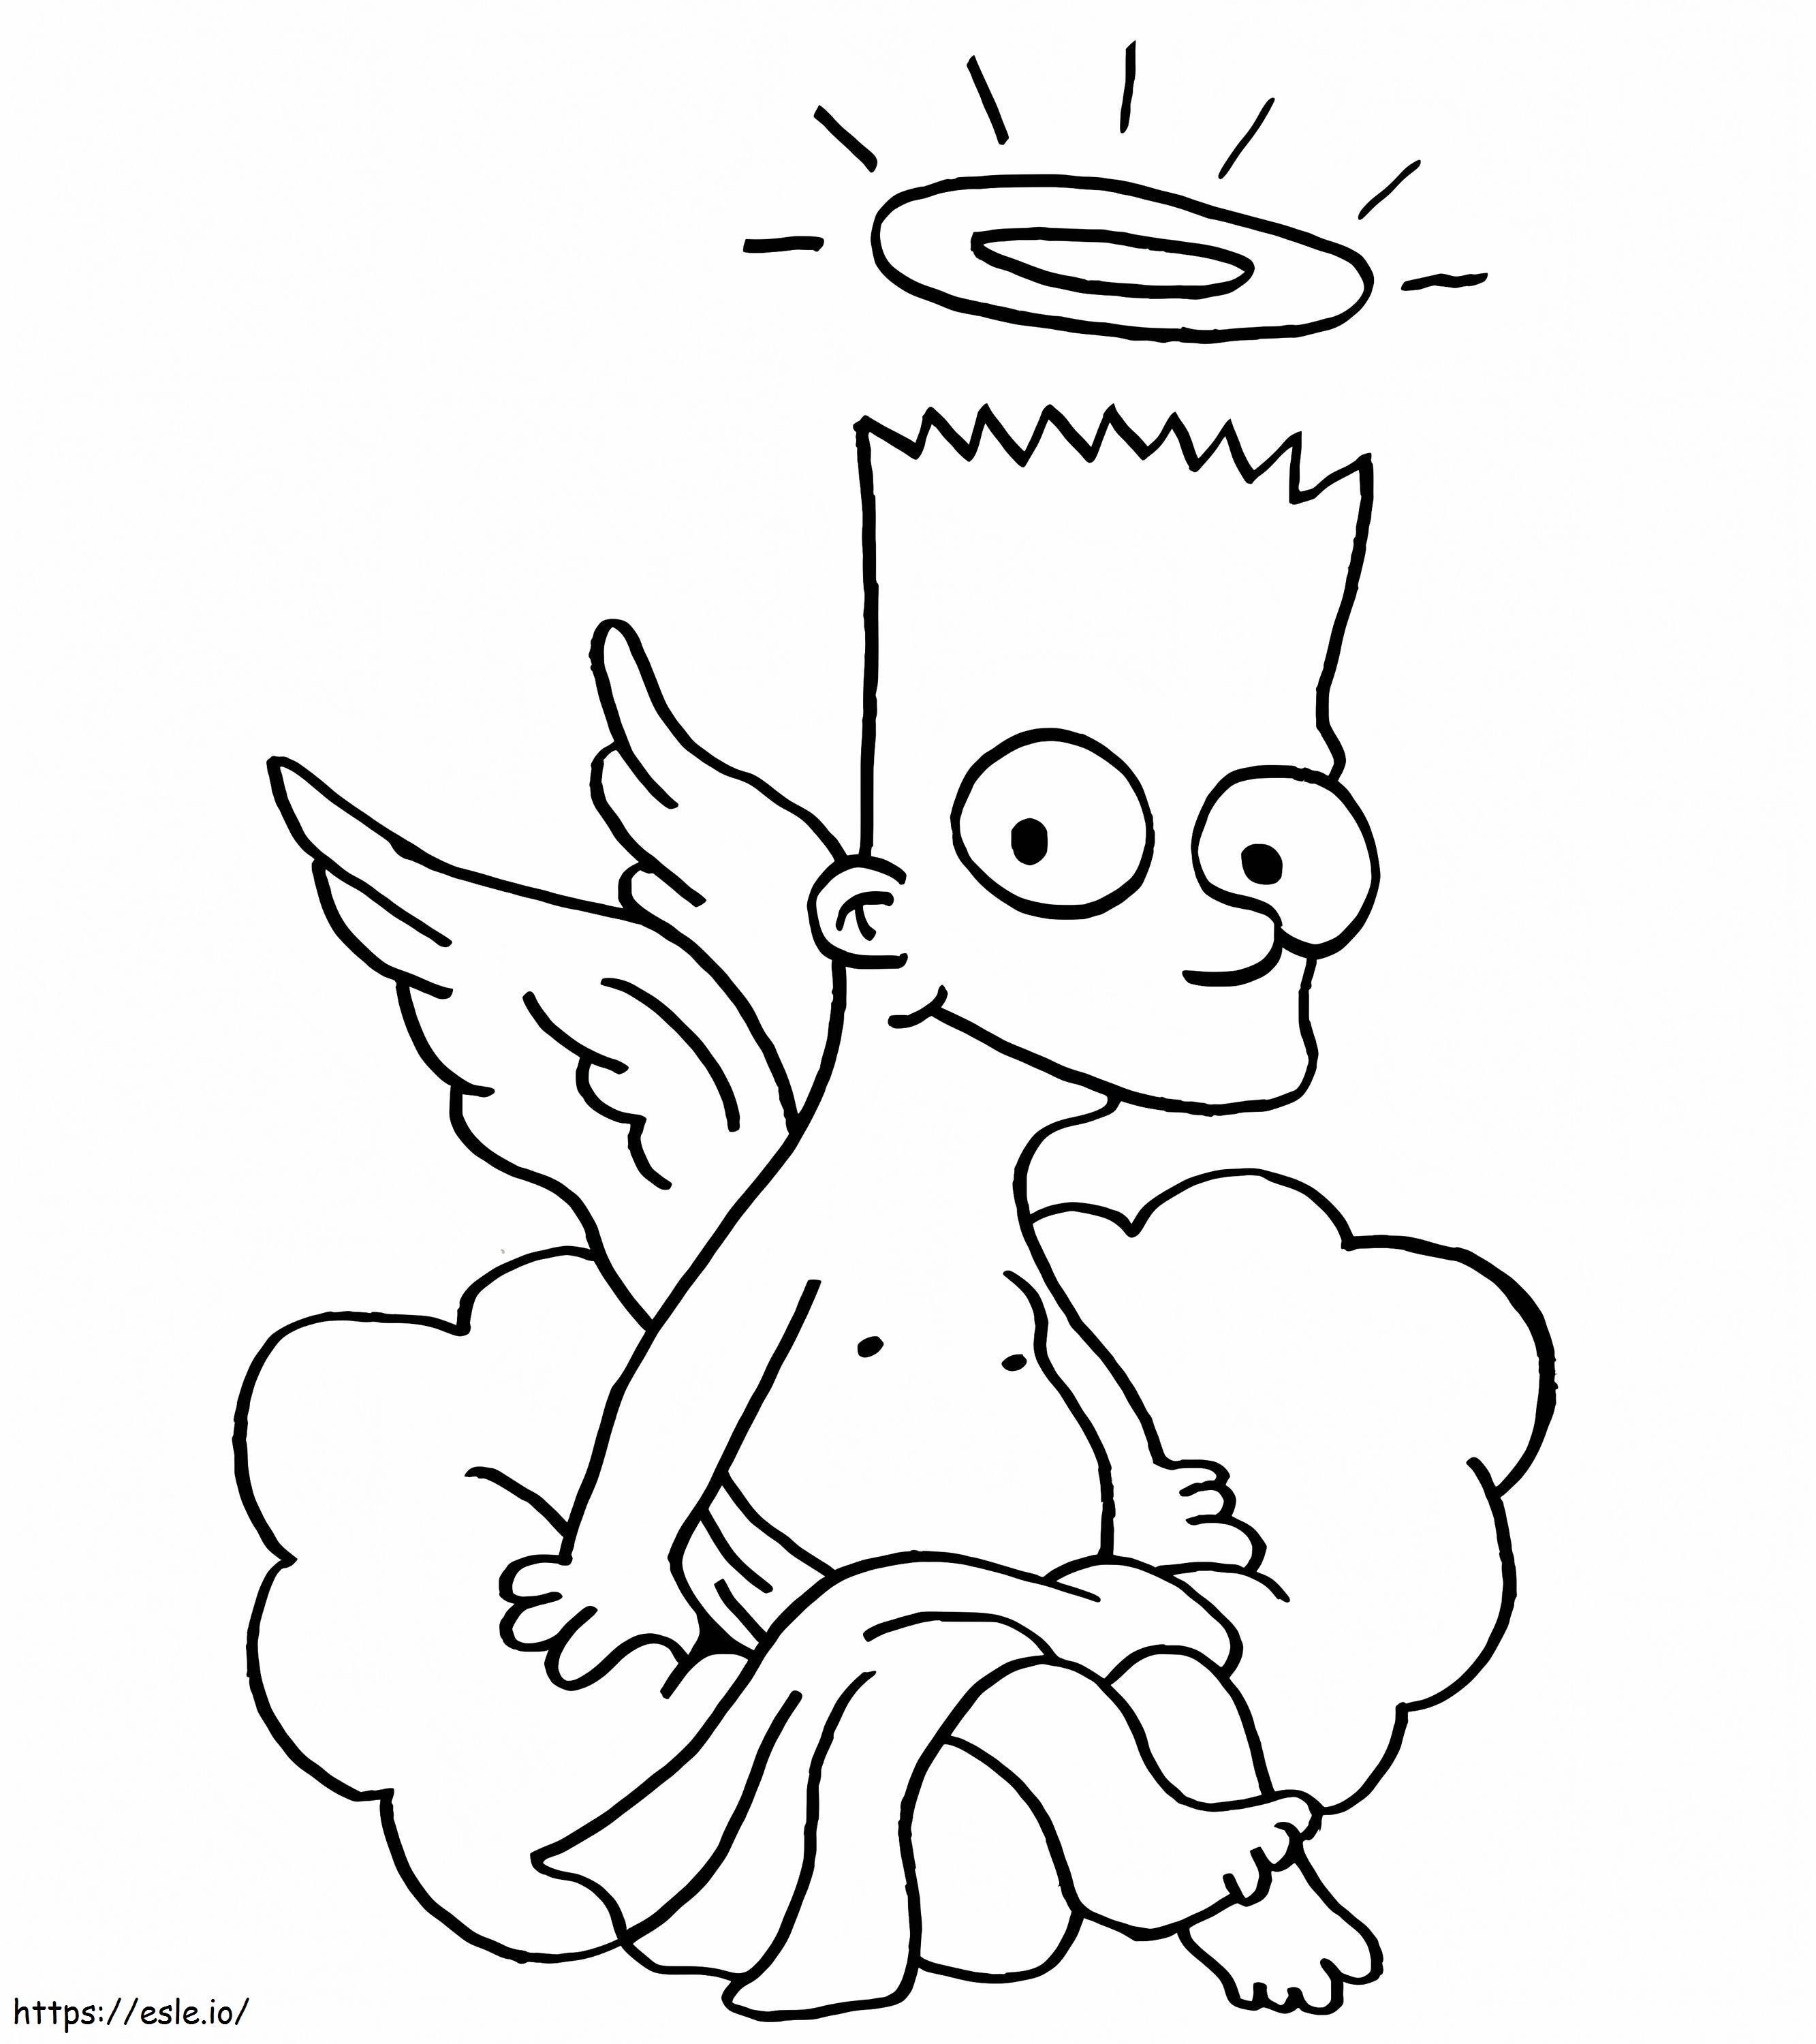 Simpsons-Engel ausmalbilder